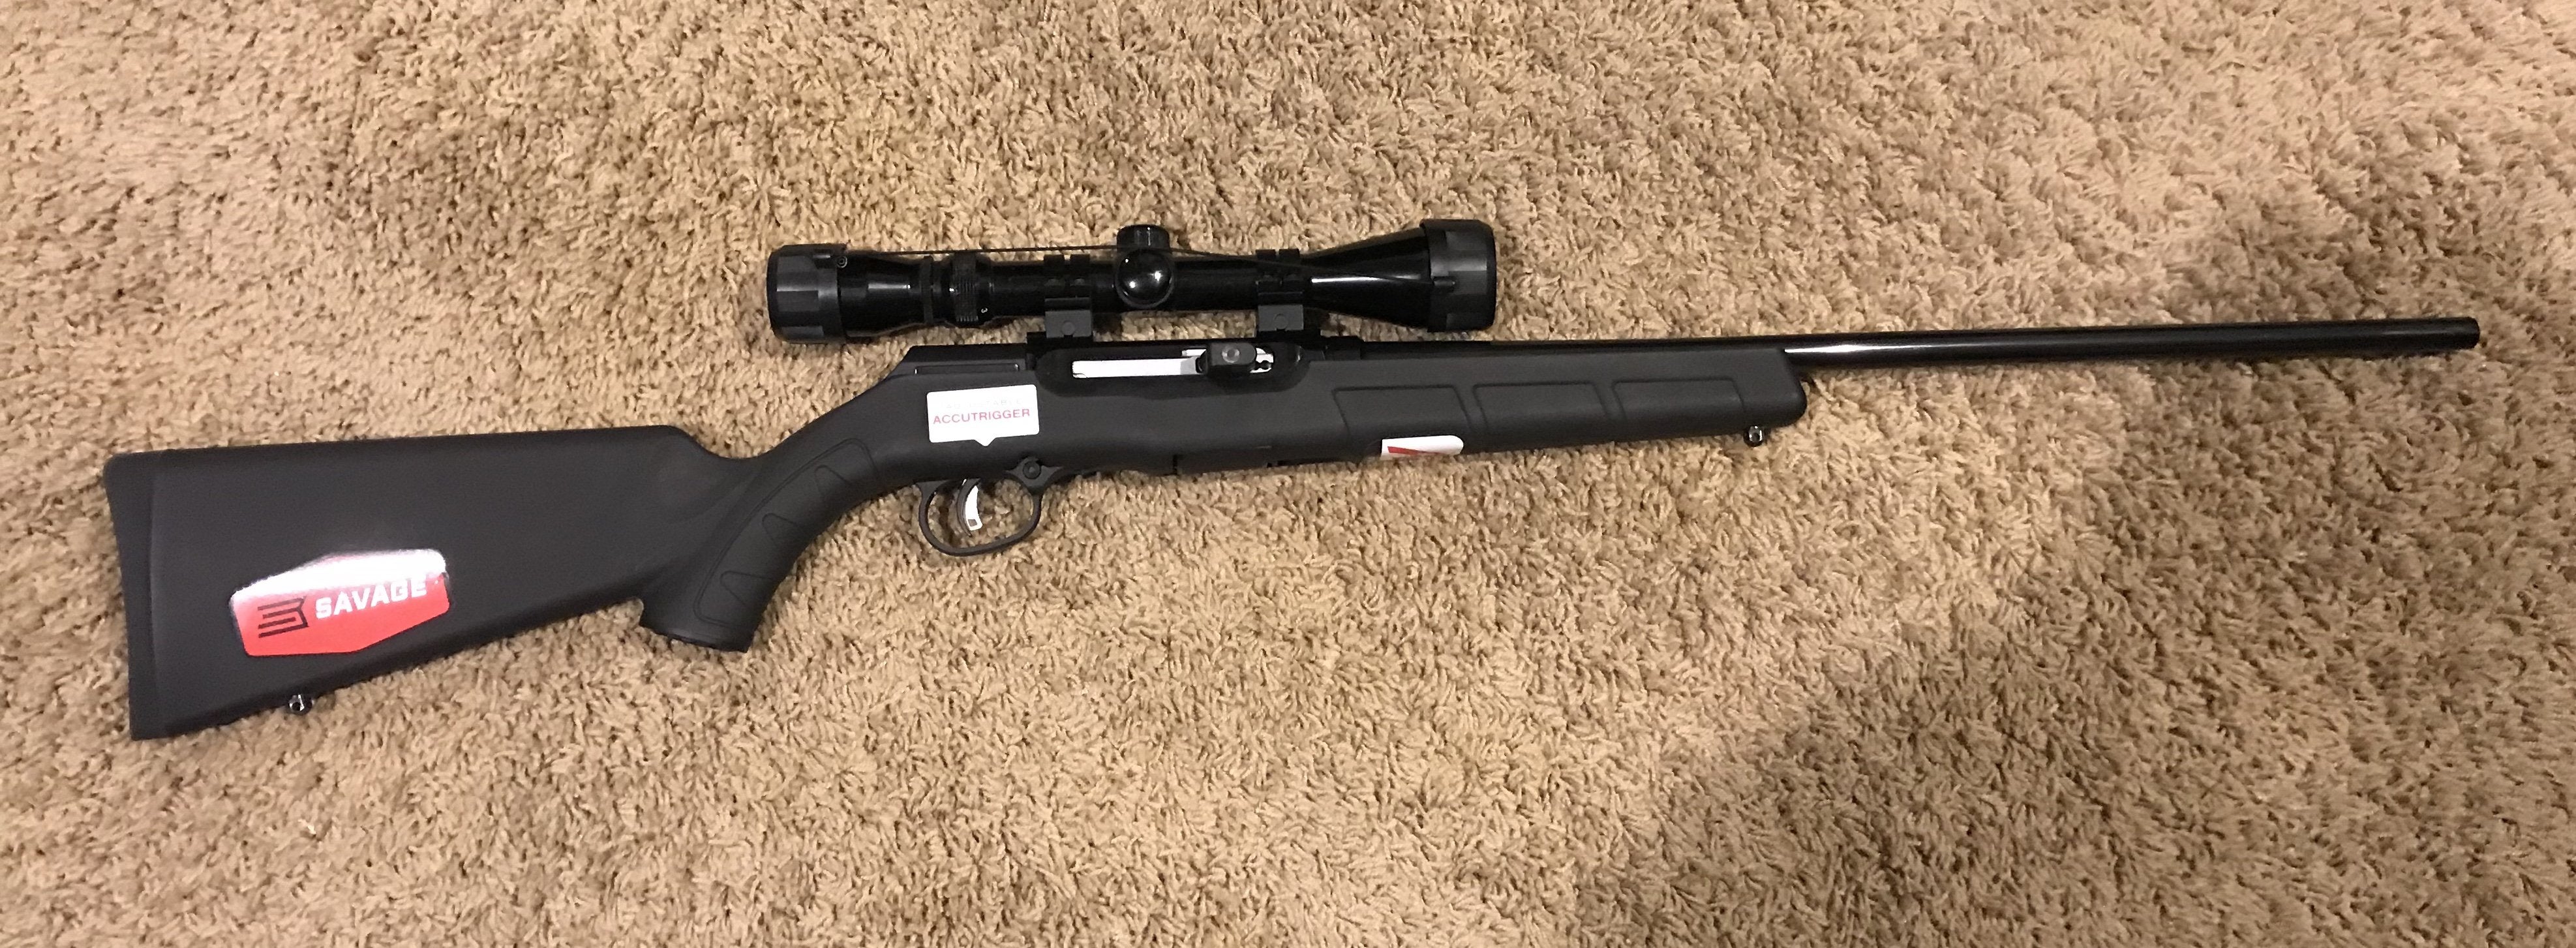 Savage A17 Rifle 17 Hmr Arkansas Hunting